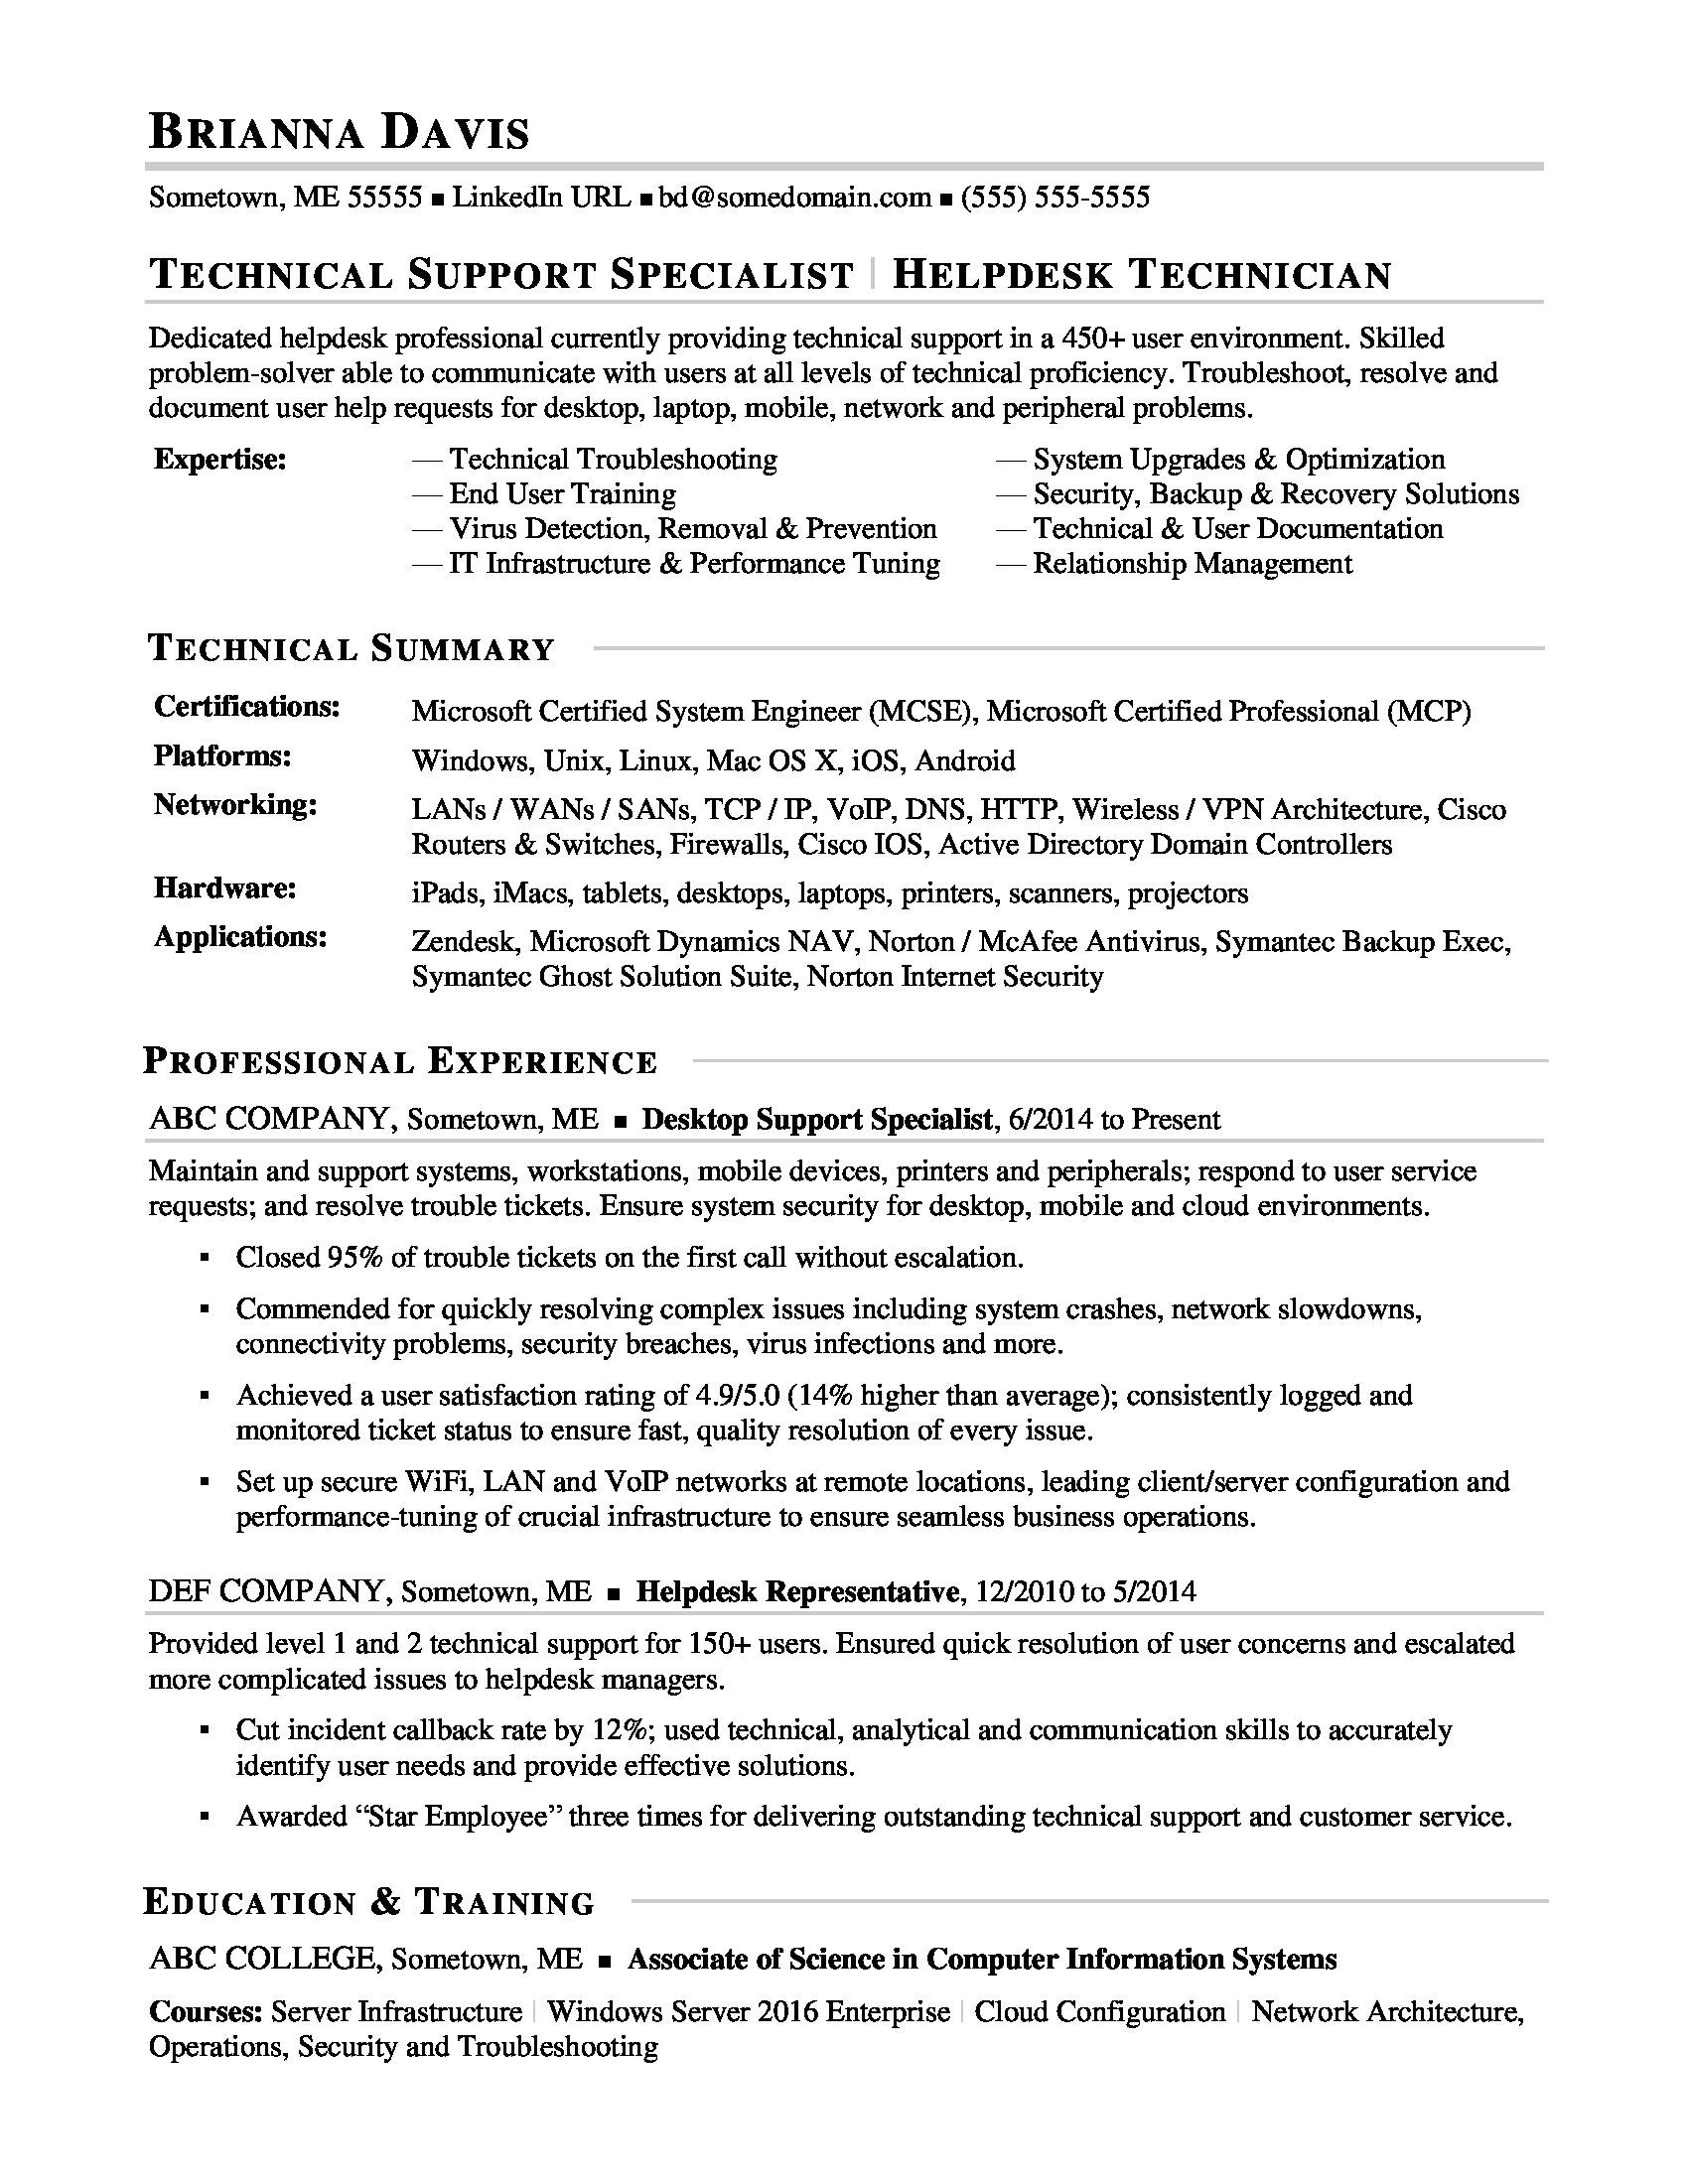 Sample Helpdesk Technician Level 1 Resumes Sample Resume for Experienced It Help Desk Employee Monster.com